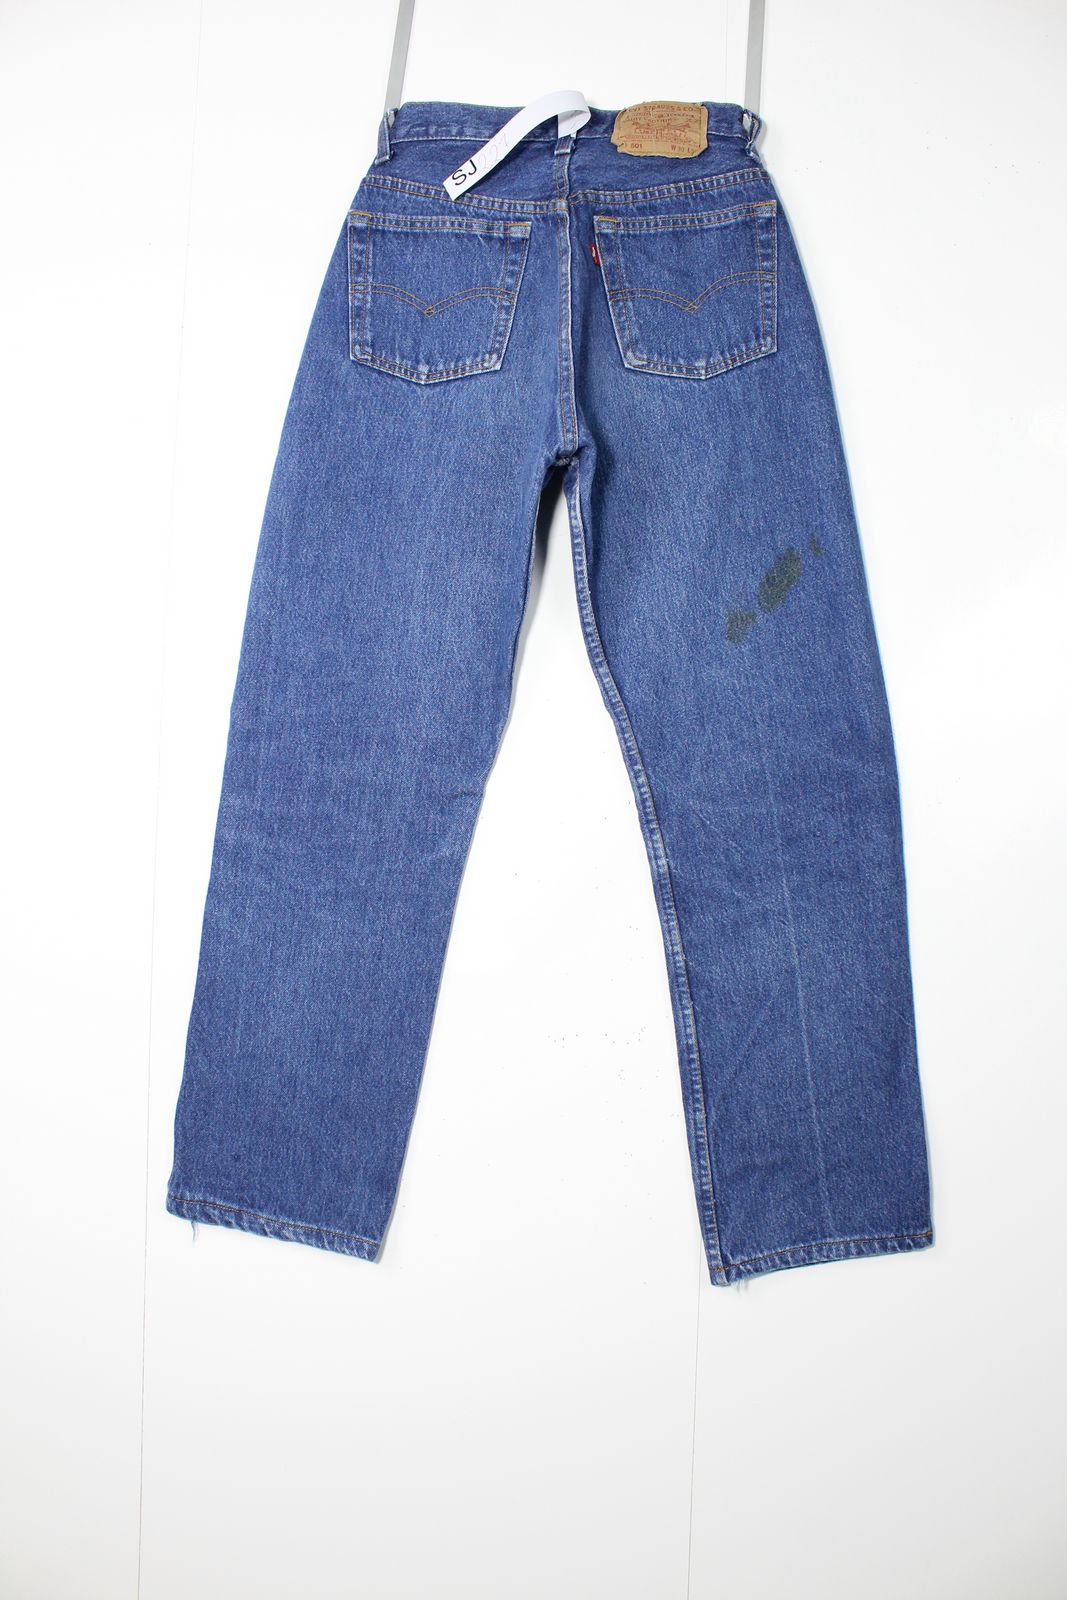 Levi's 501 Denim W30 L30 Made In USA Jeans Vintage